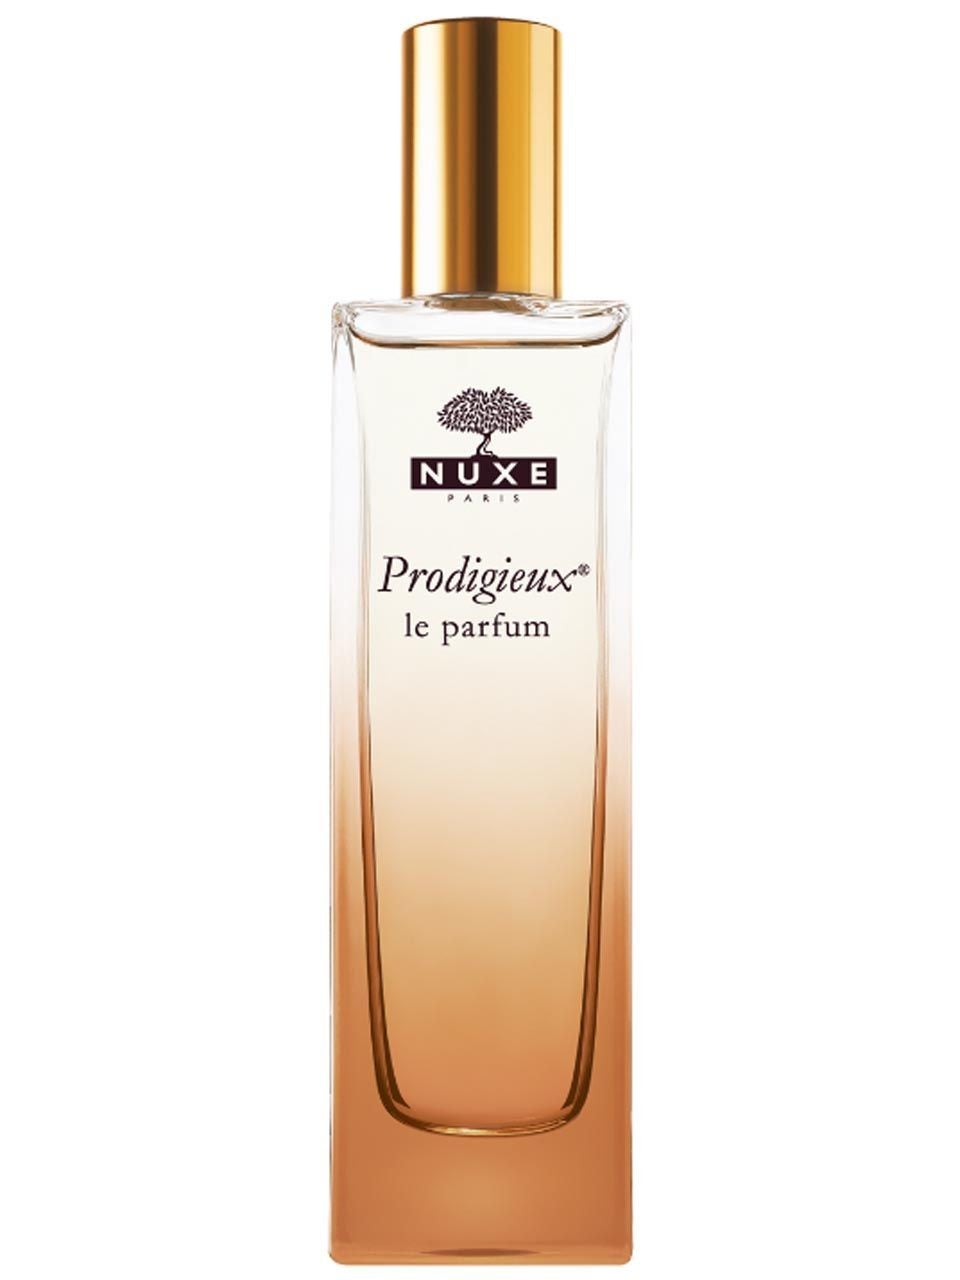 NUXE Prodigieux Le Parfum 50ml EDP Women's Perfume